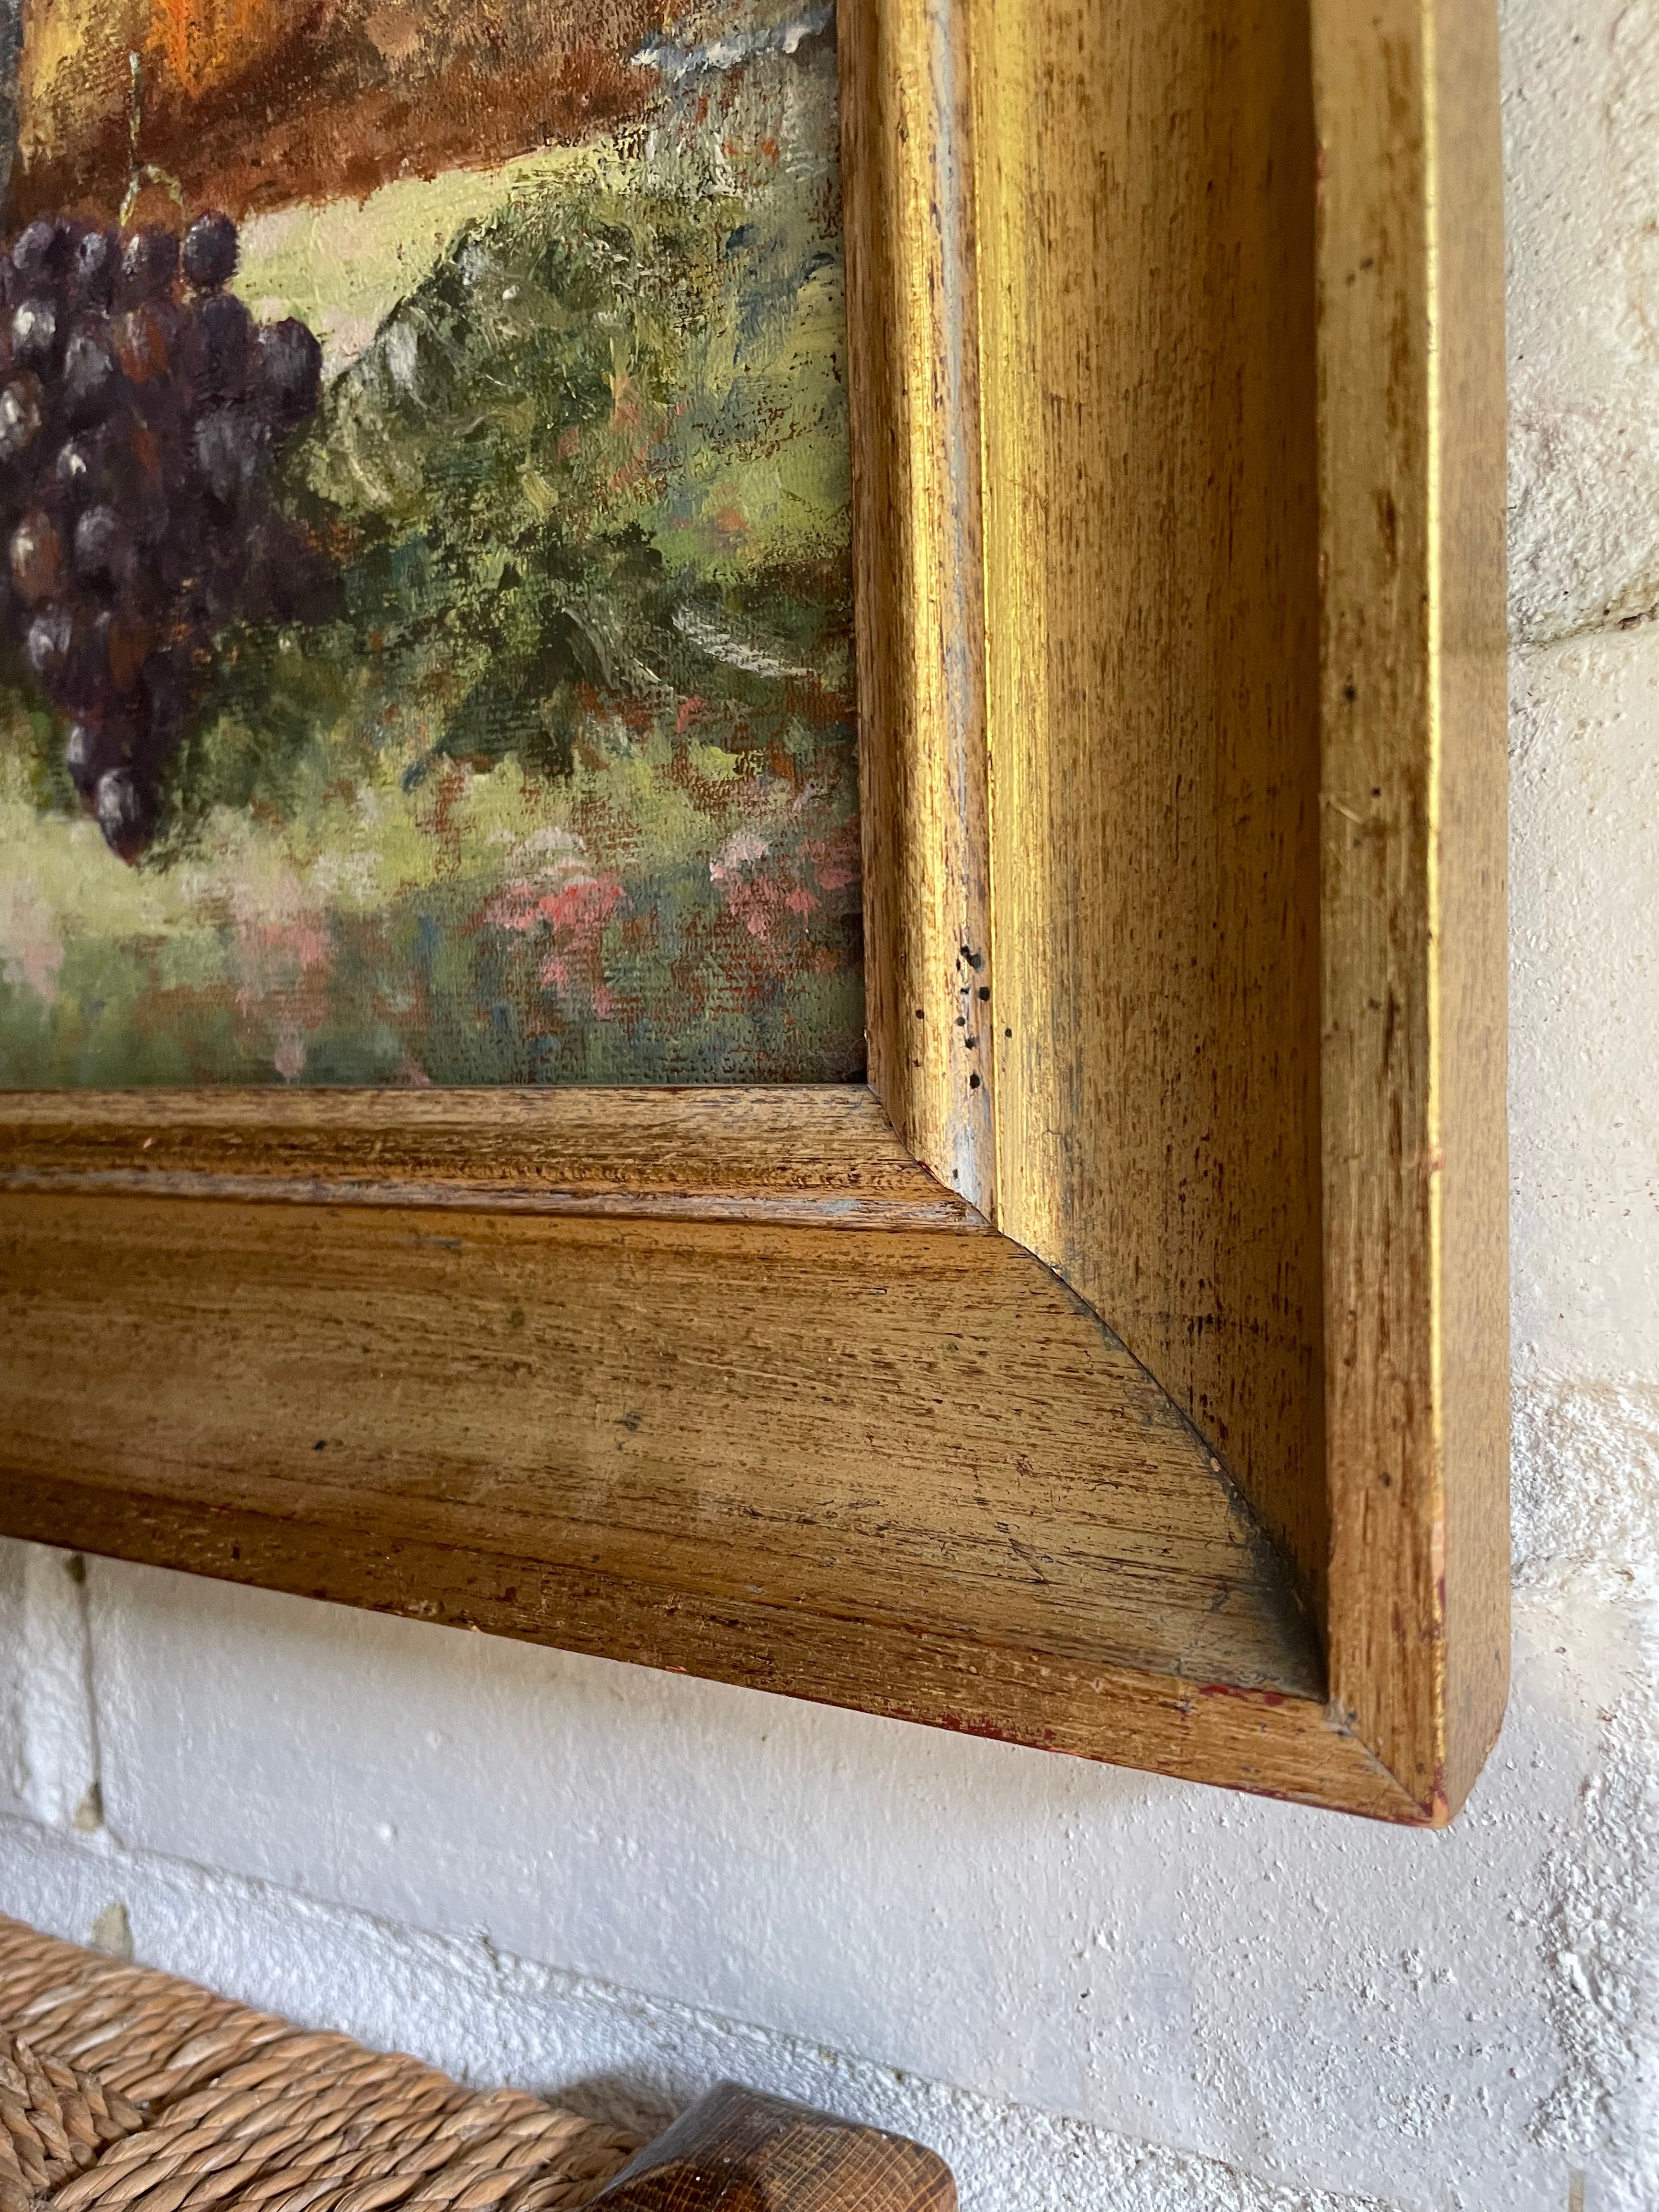 Fruit Still Life:  Framed Vintage Oil on Board